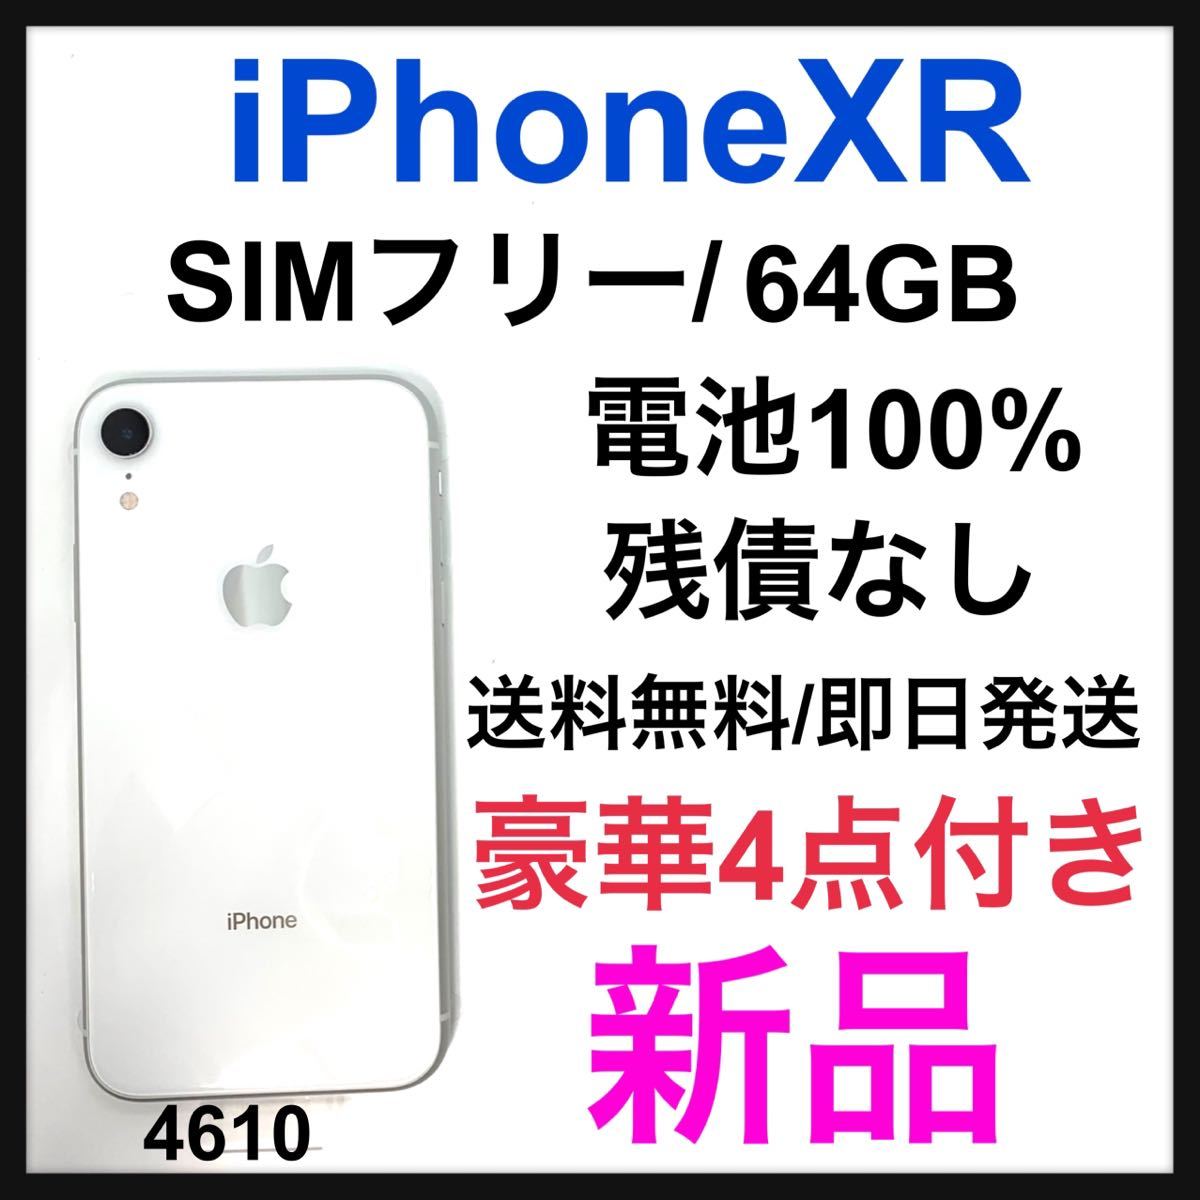 特価 新品 iPhone XR White 64 GB SIMフリー 本体 iPhone